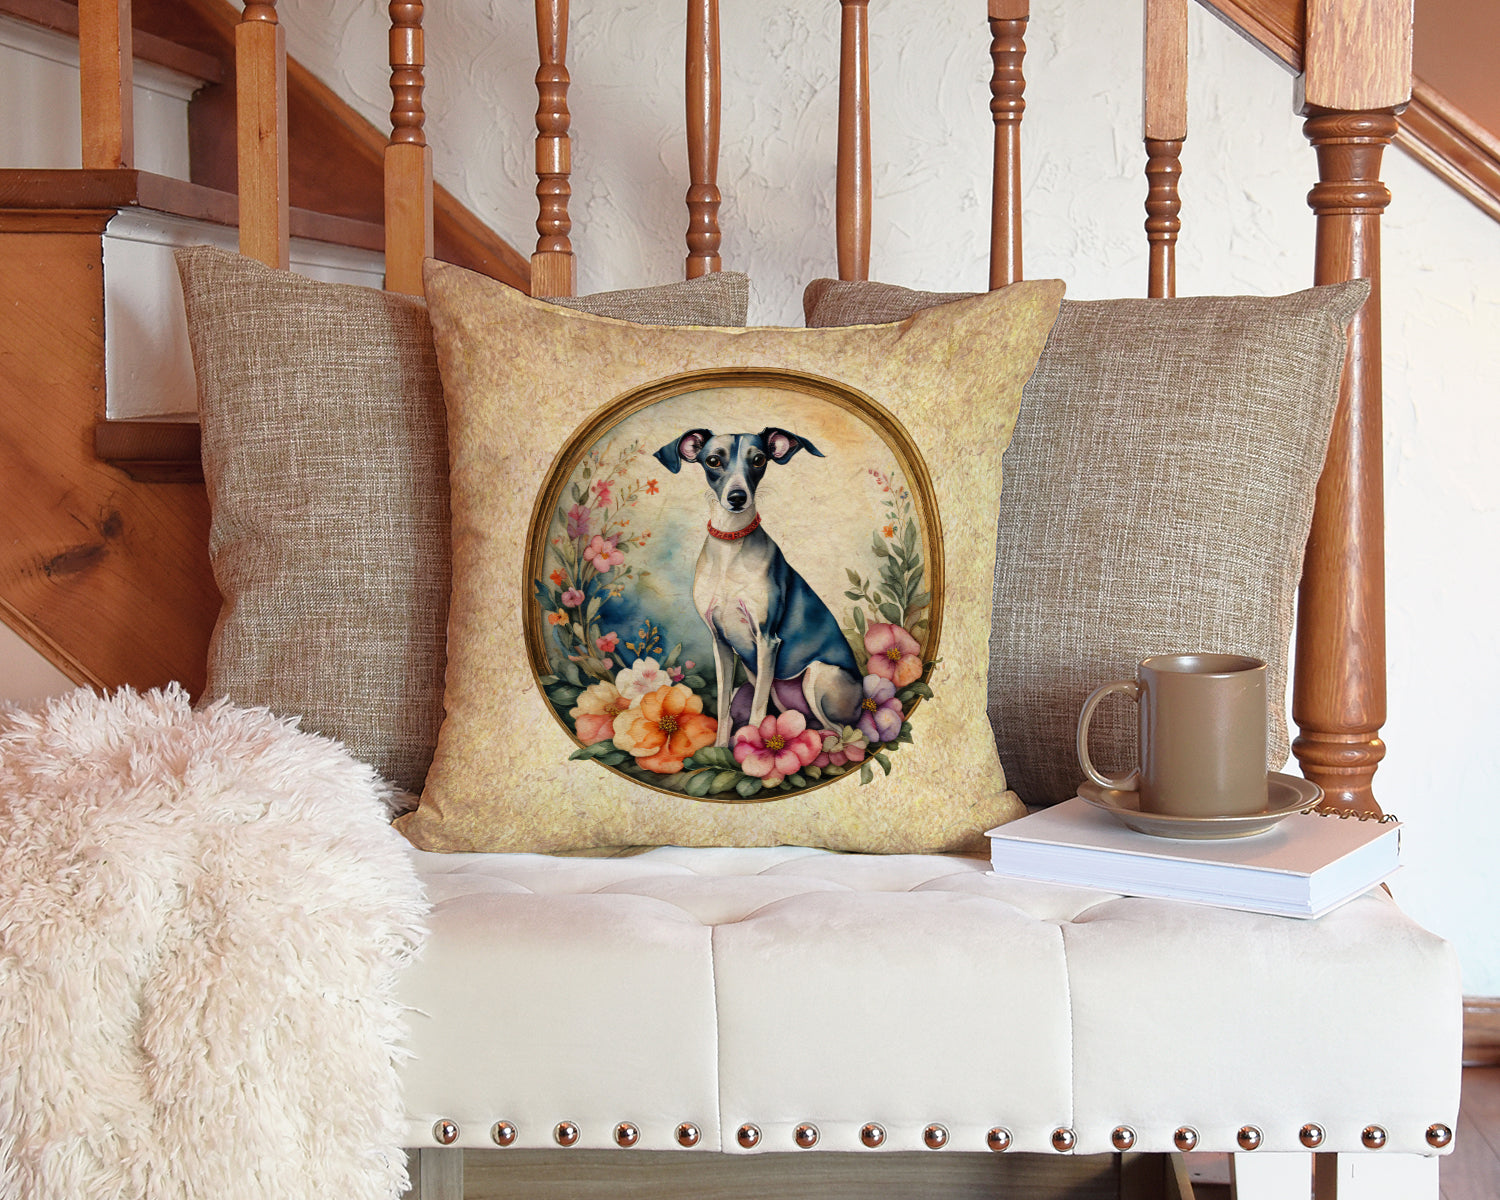 Italian Greyhound and Flowers Fabric Decorative Pillow